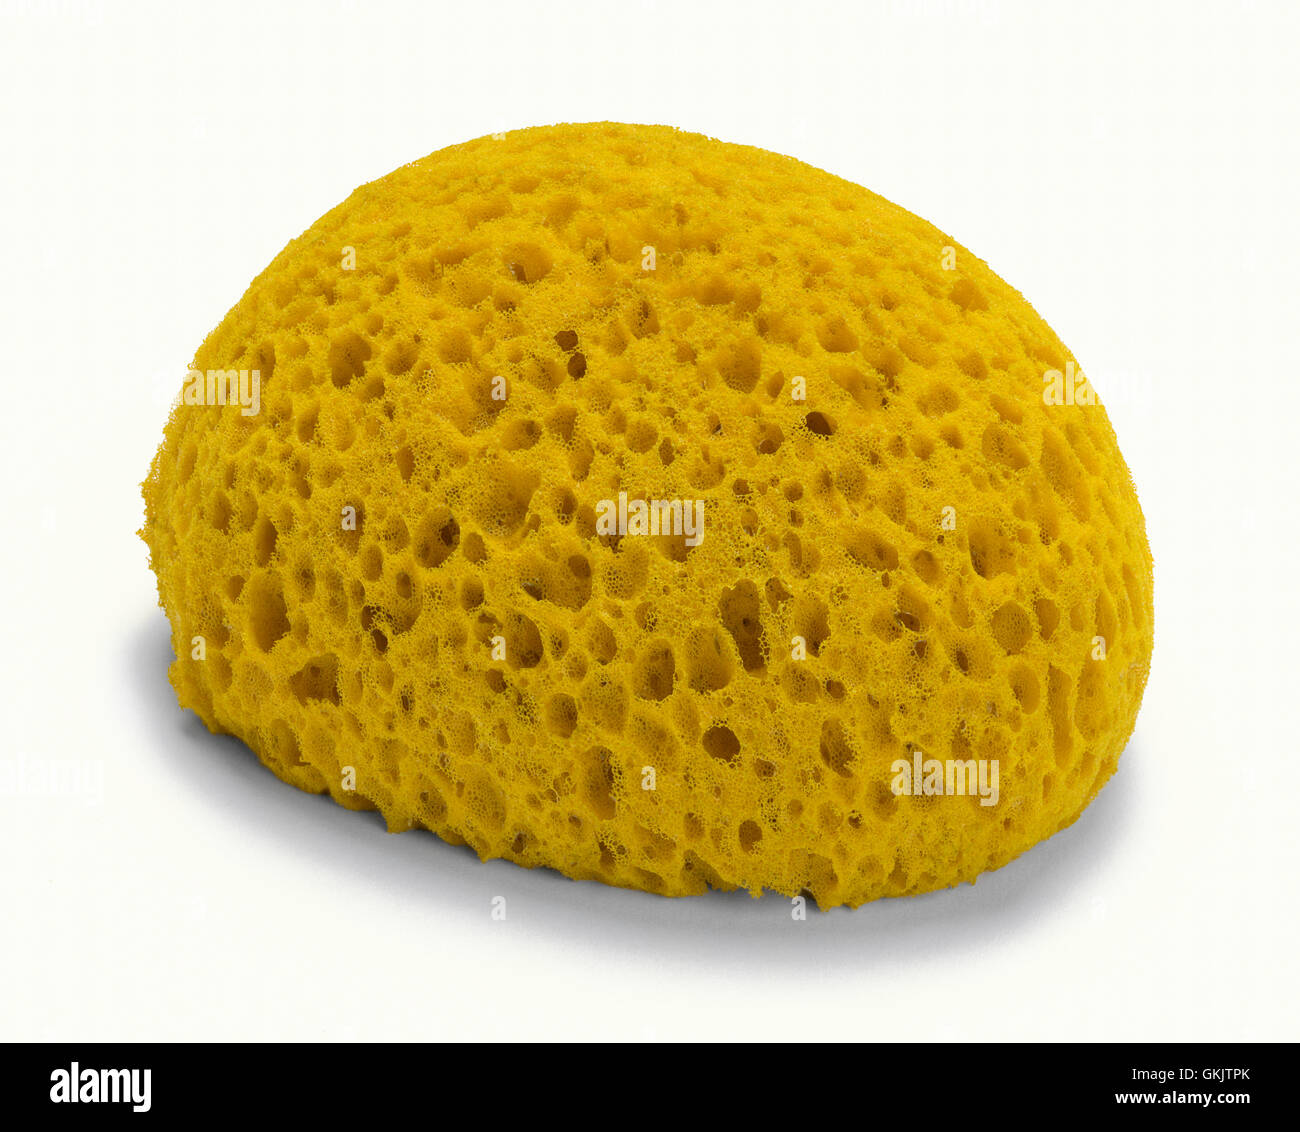 Rounded Natural Sponge Isolated on White Background. Stock Photo